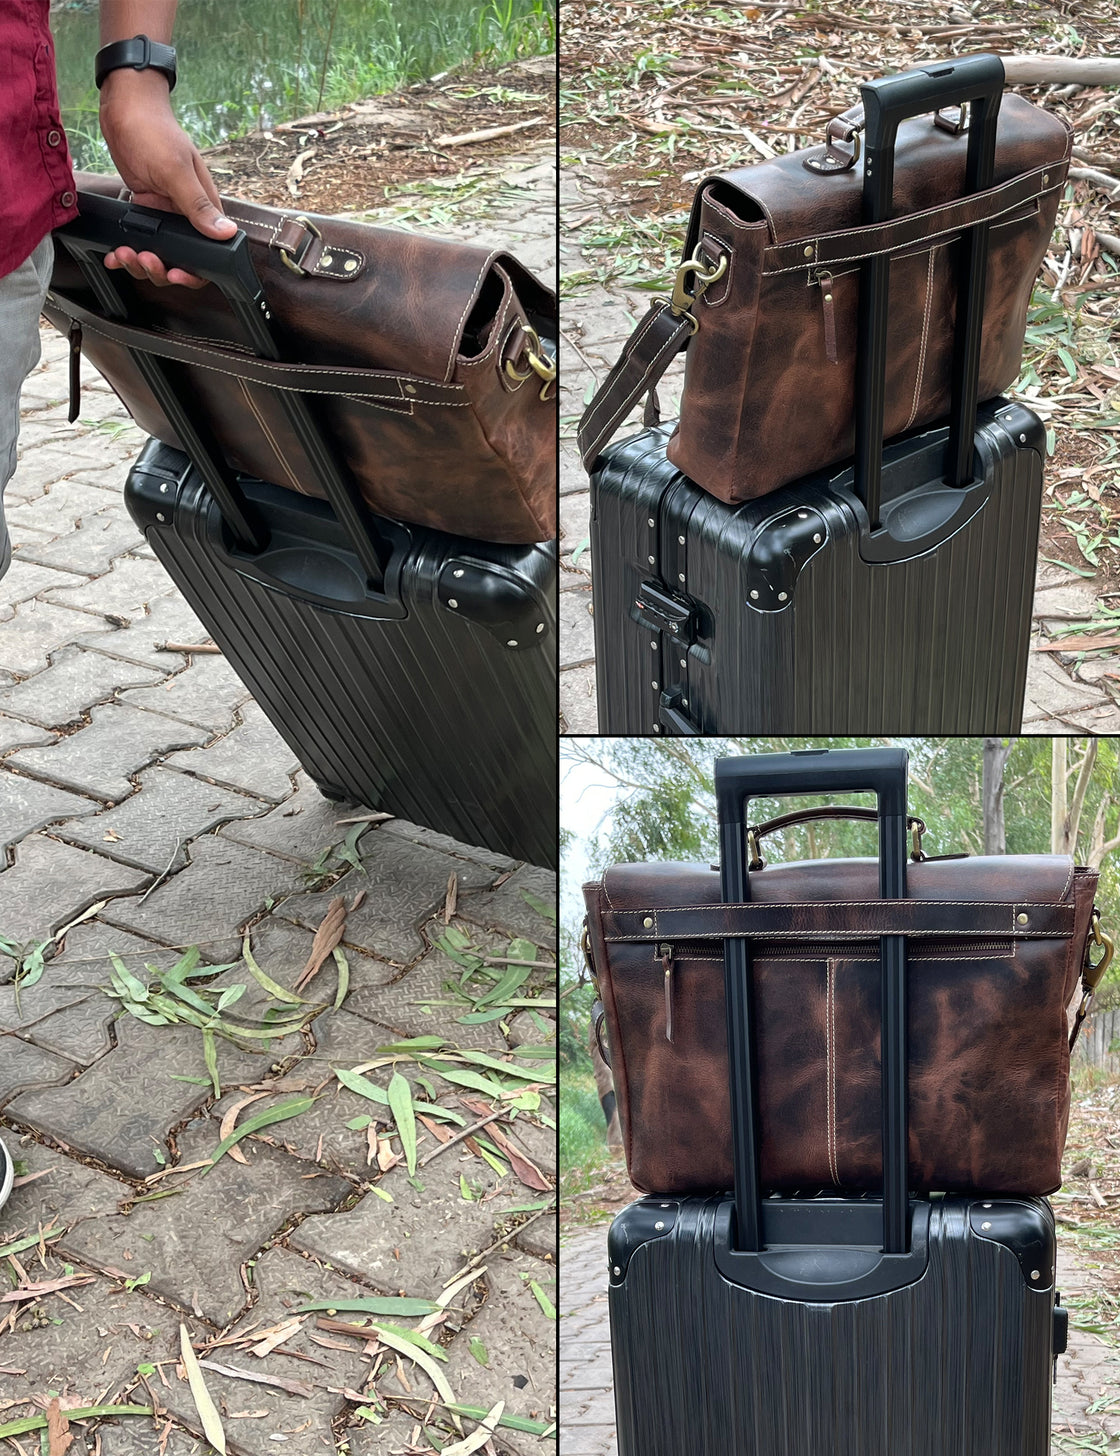 Predator 16" Leather Satchel Laptop Briefcase Bag (Mulberry)